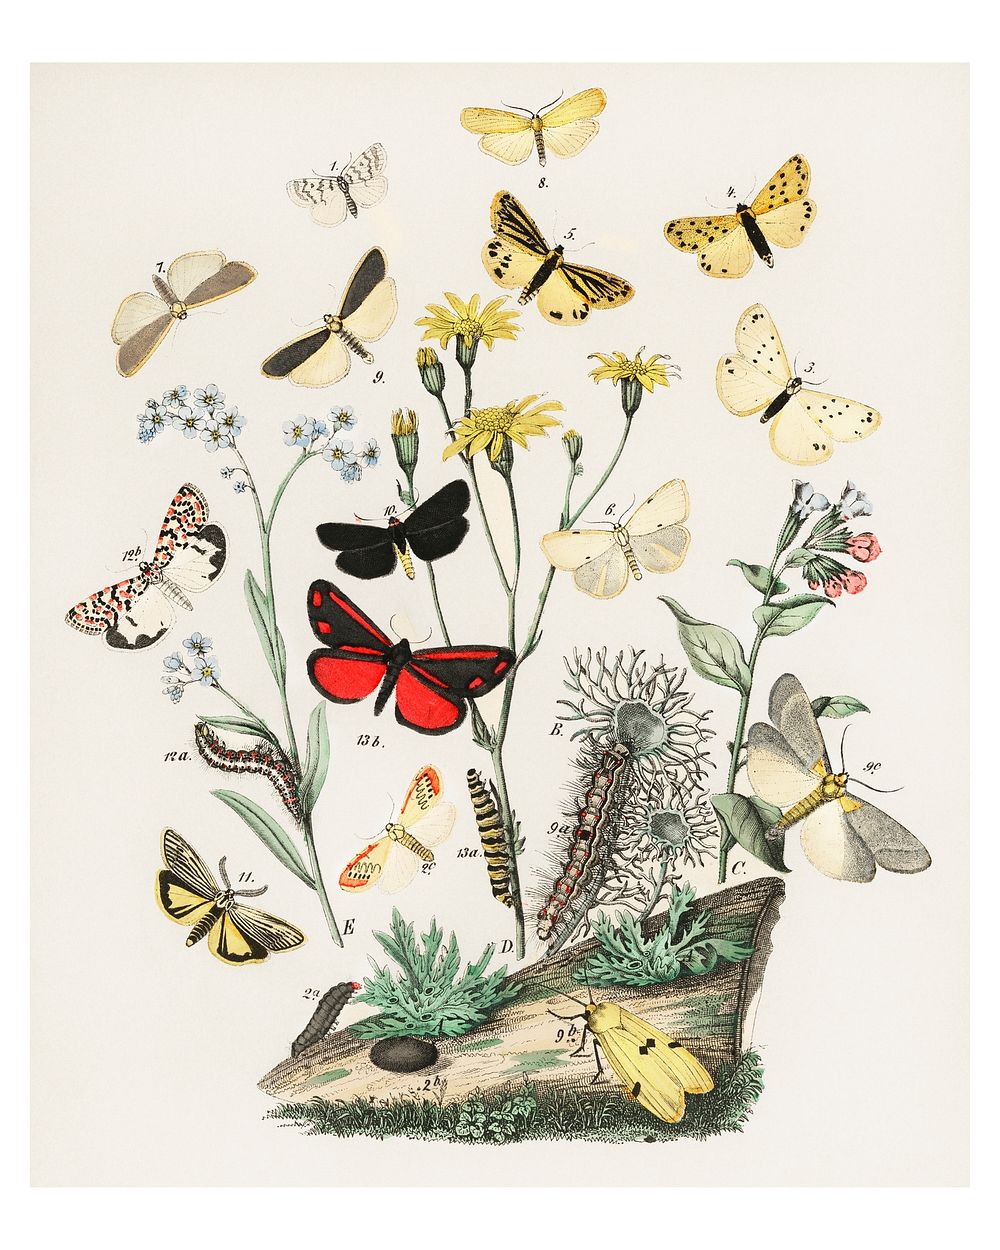 Fluttering butterflies and caterpillars vintage illustration wall art print and poster design remix from original artwork.